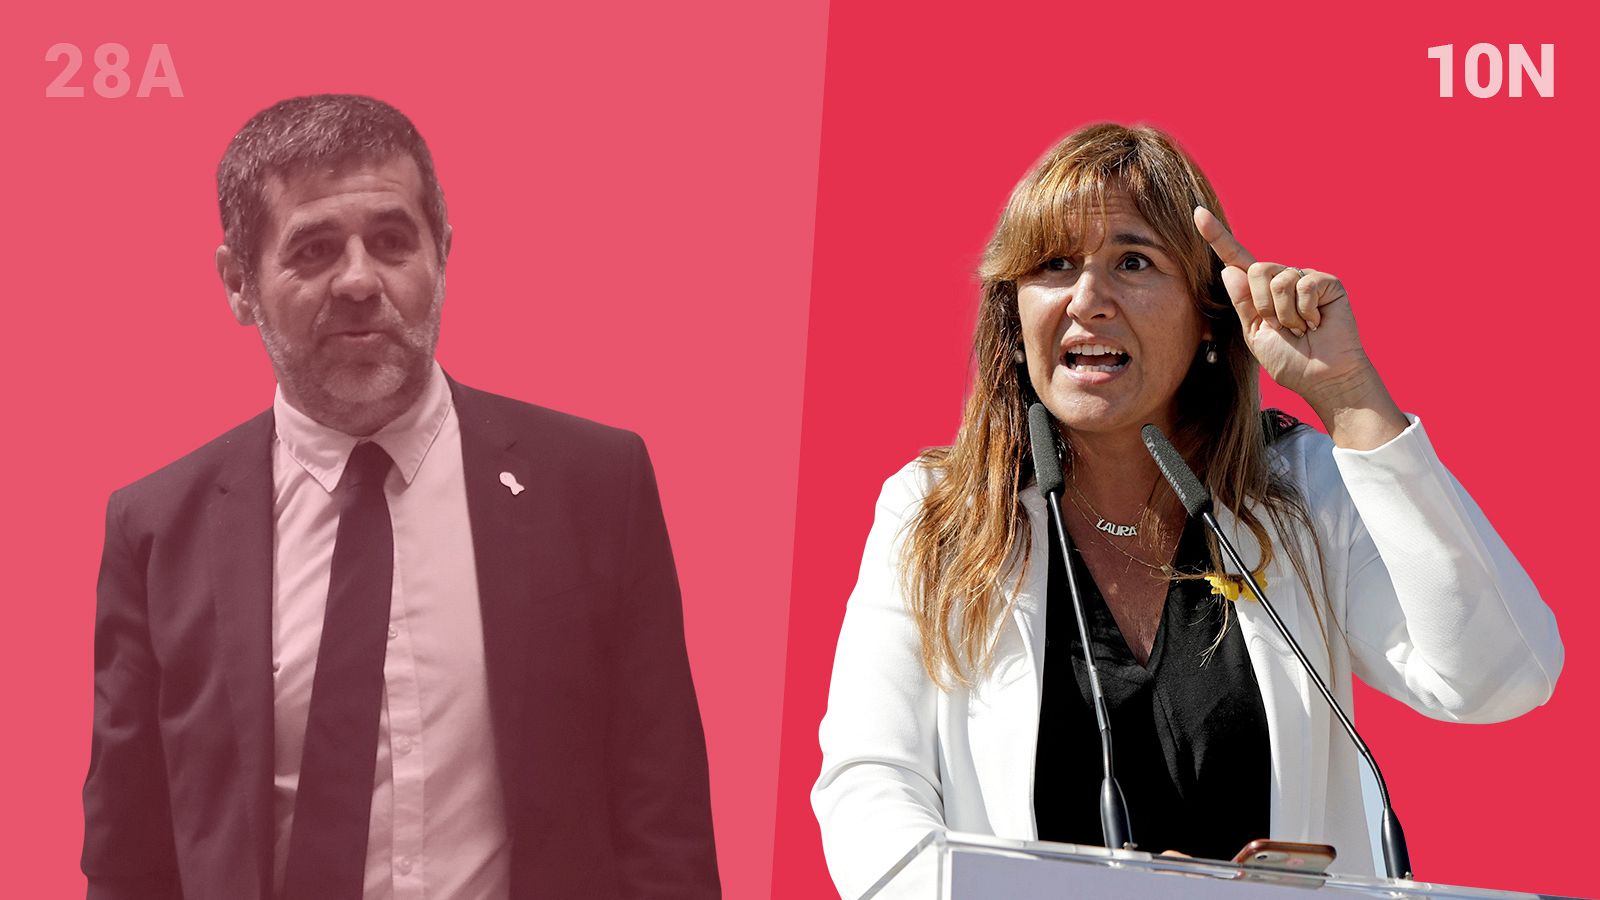 Laura Borràs (derecha) es la candidata de JxCat a las elecciones generales después de que el Supremo condenara e inhabilitara a Jordi Sànchez (izquierda) en la sentencia del 'procés'.